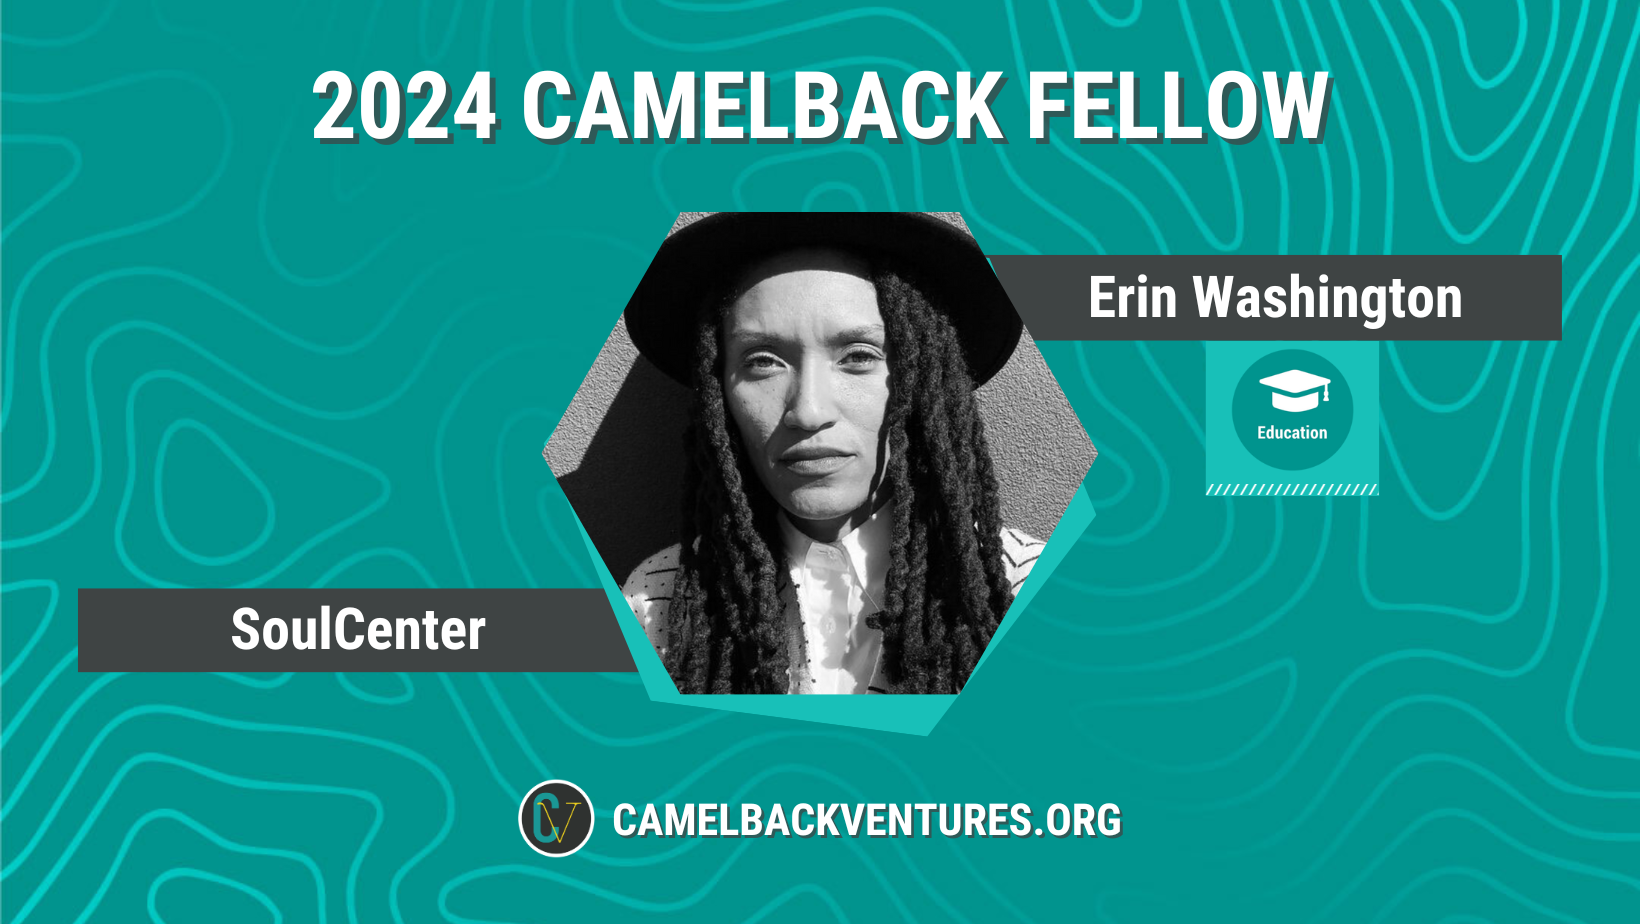 2024 Camelback Education Fellow Erin Washington, Founder of SoulCenter